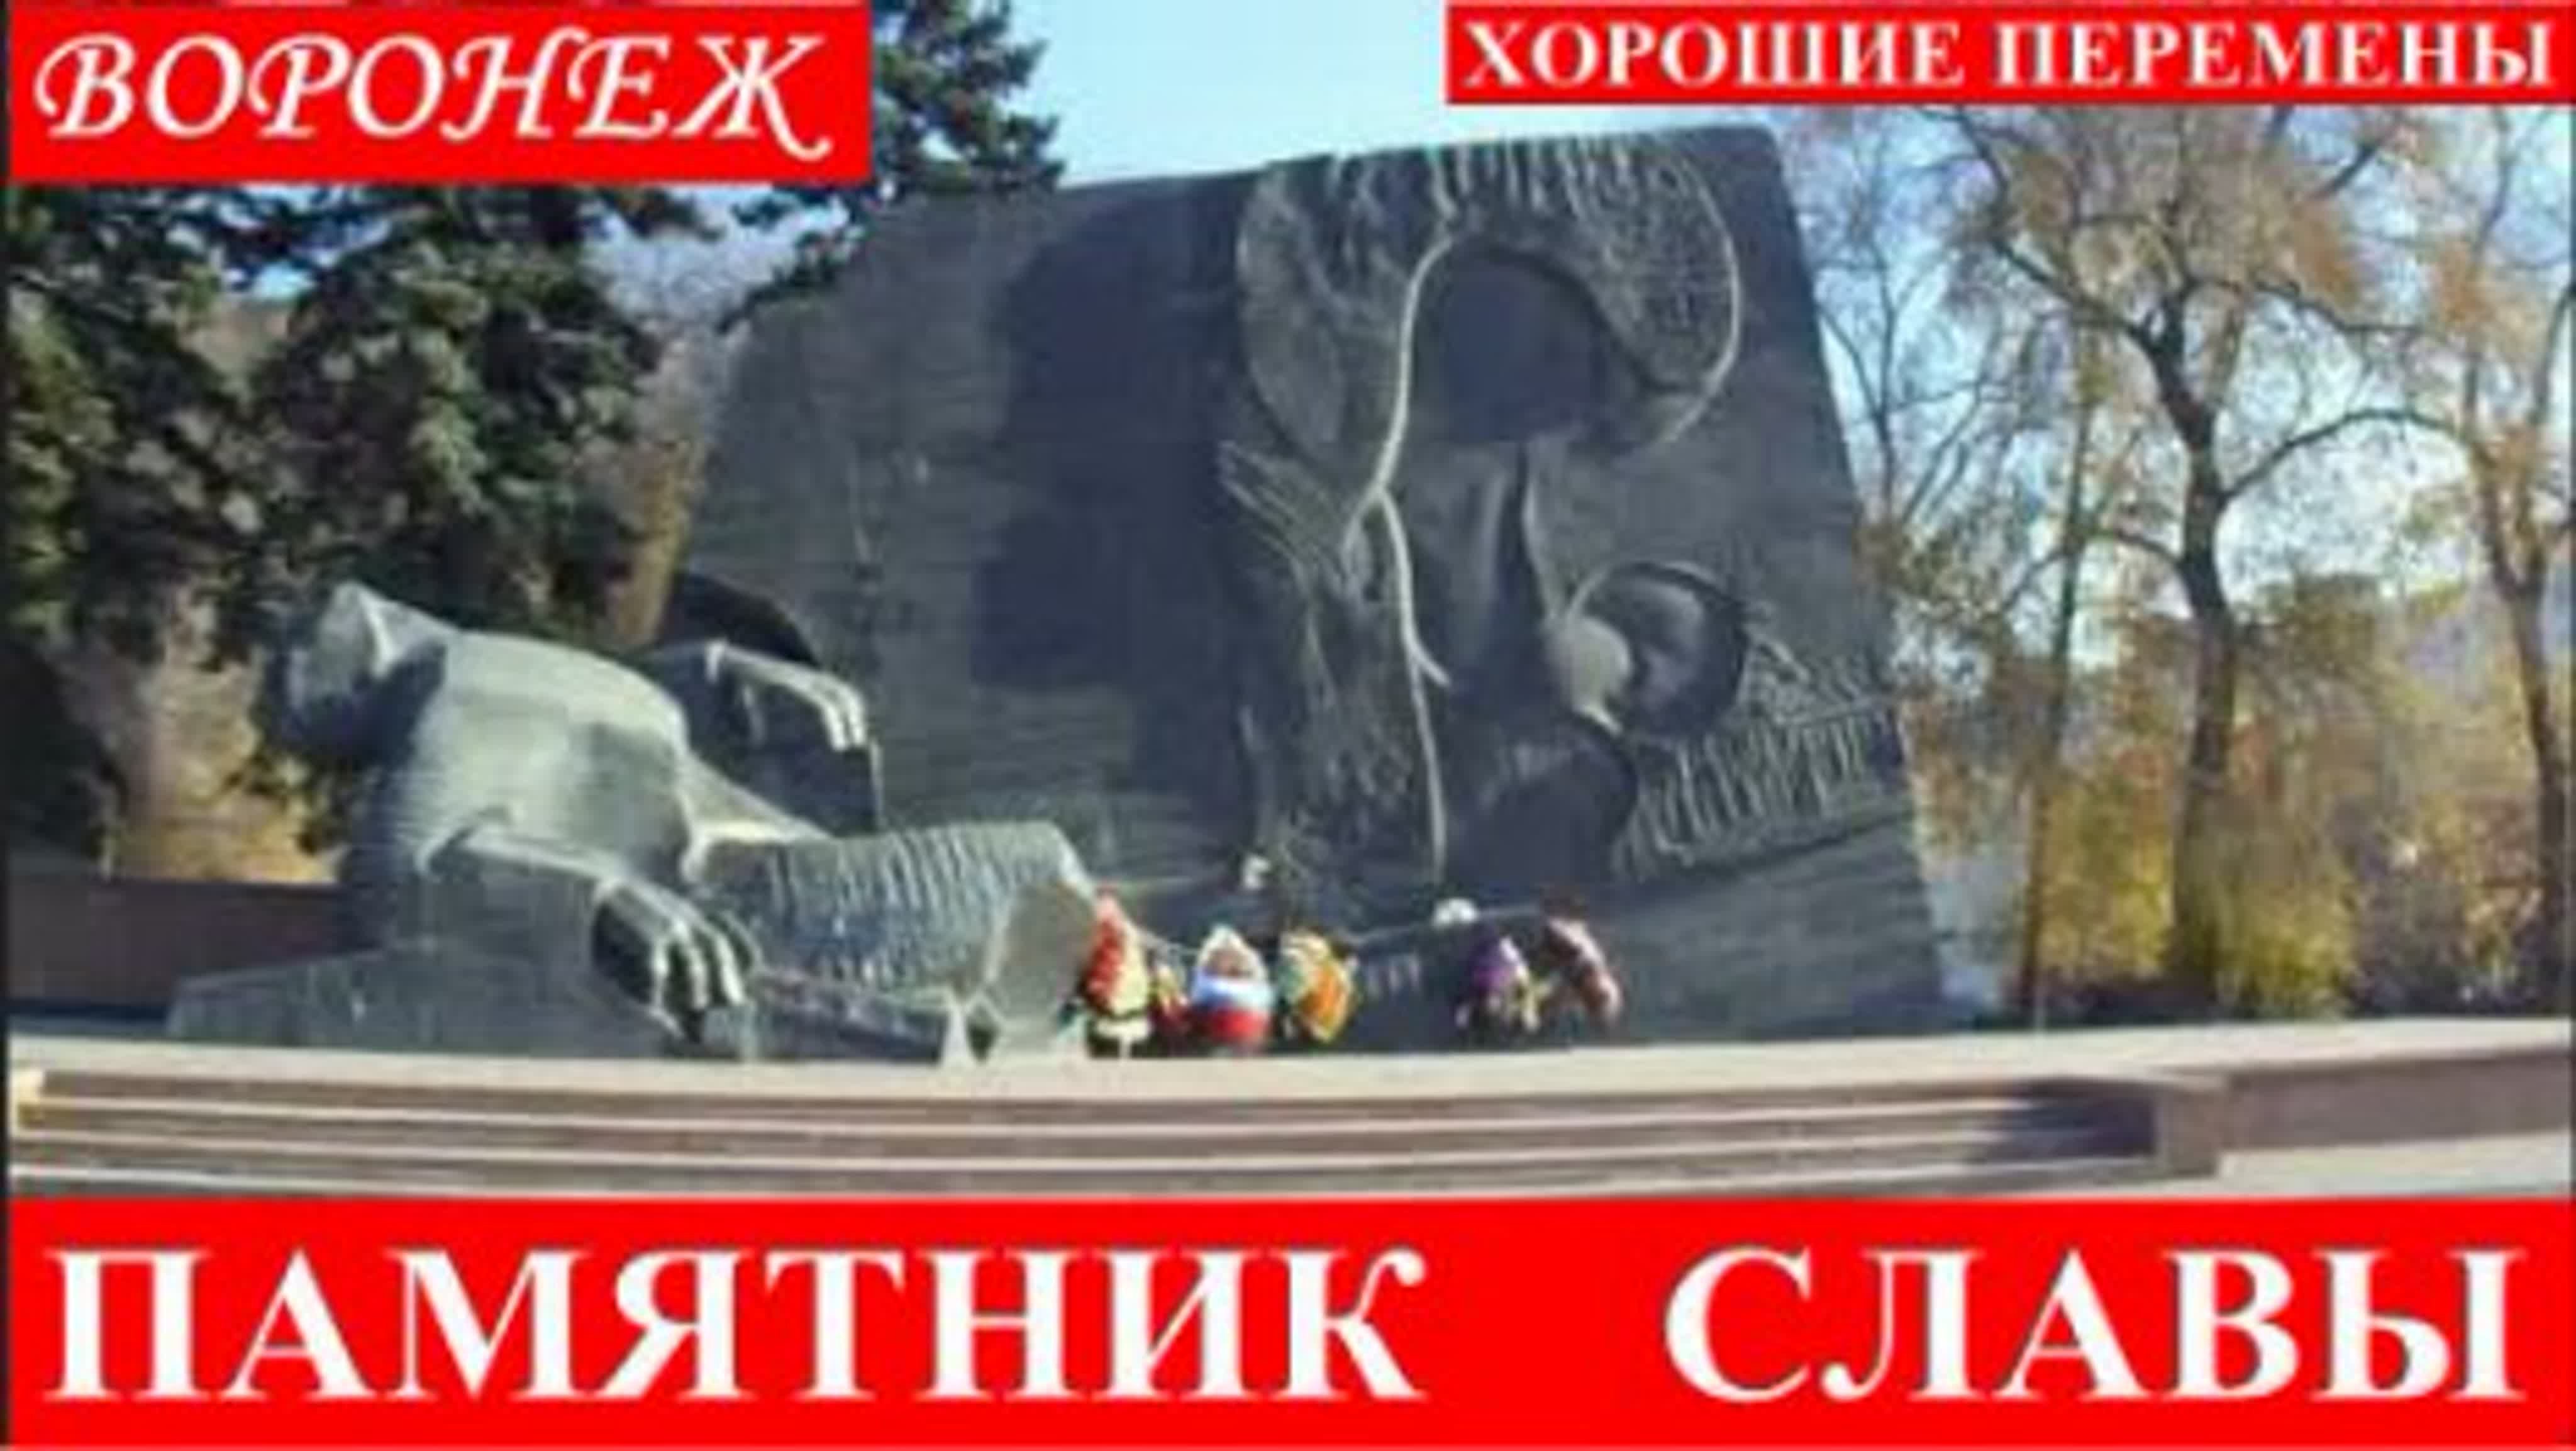 Monument of glory voronezh #26